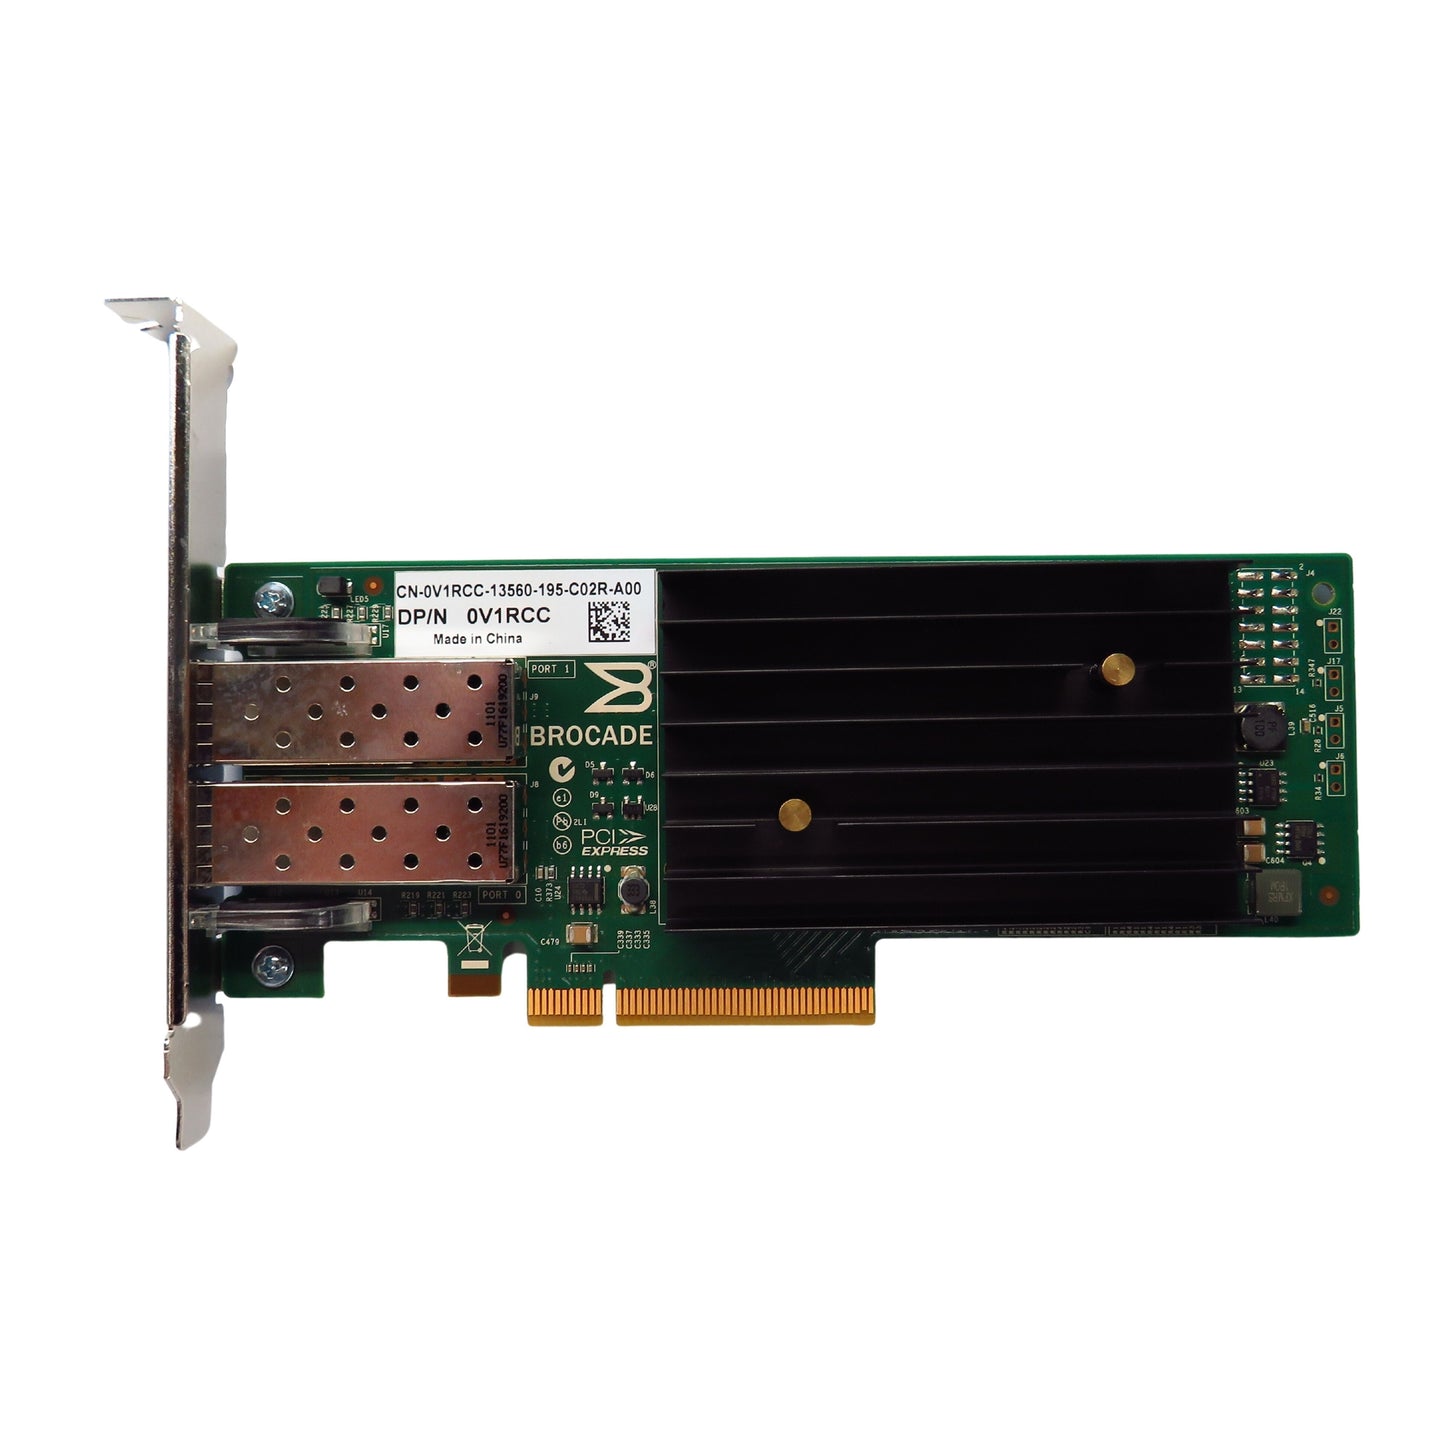 Dell V1RCC 1020 2 Port 10GB FCoE Twinax CNA PCIe Adapter Card (Refurbished)